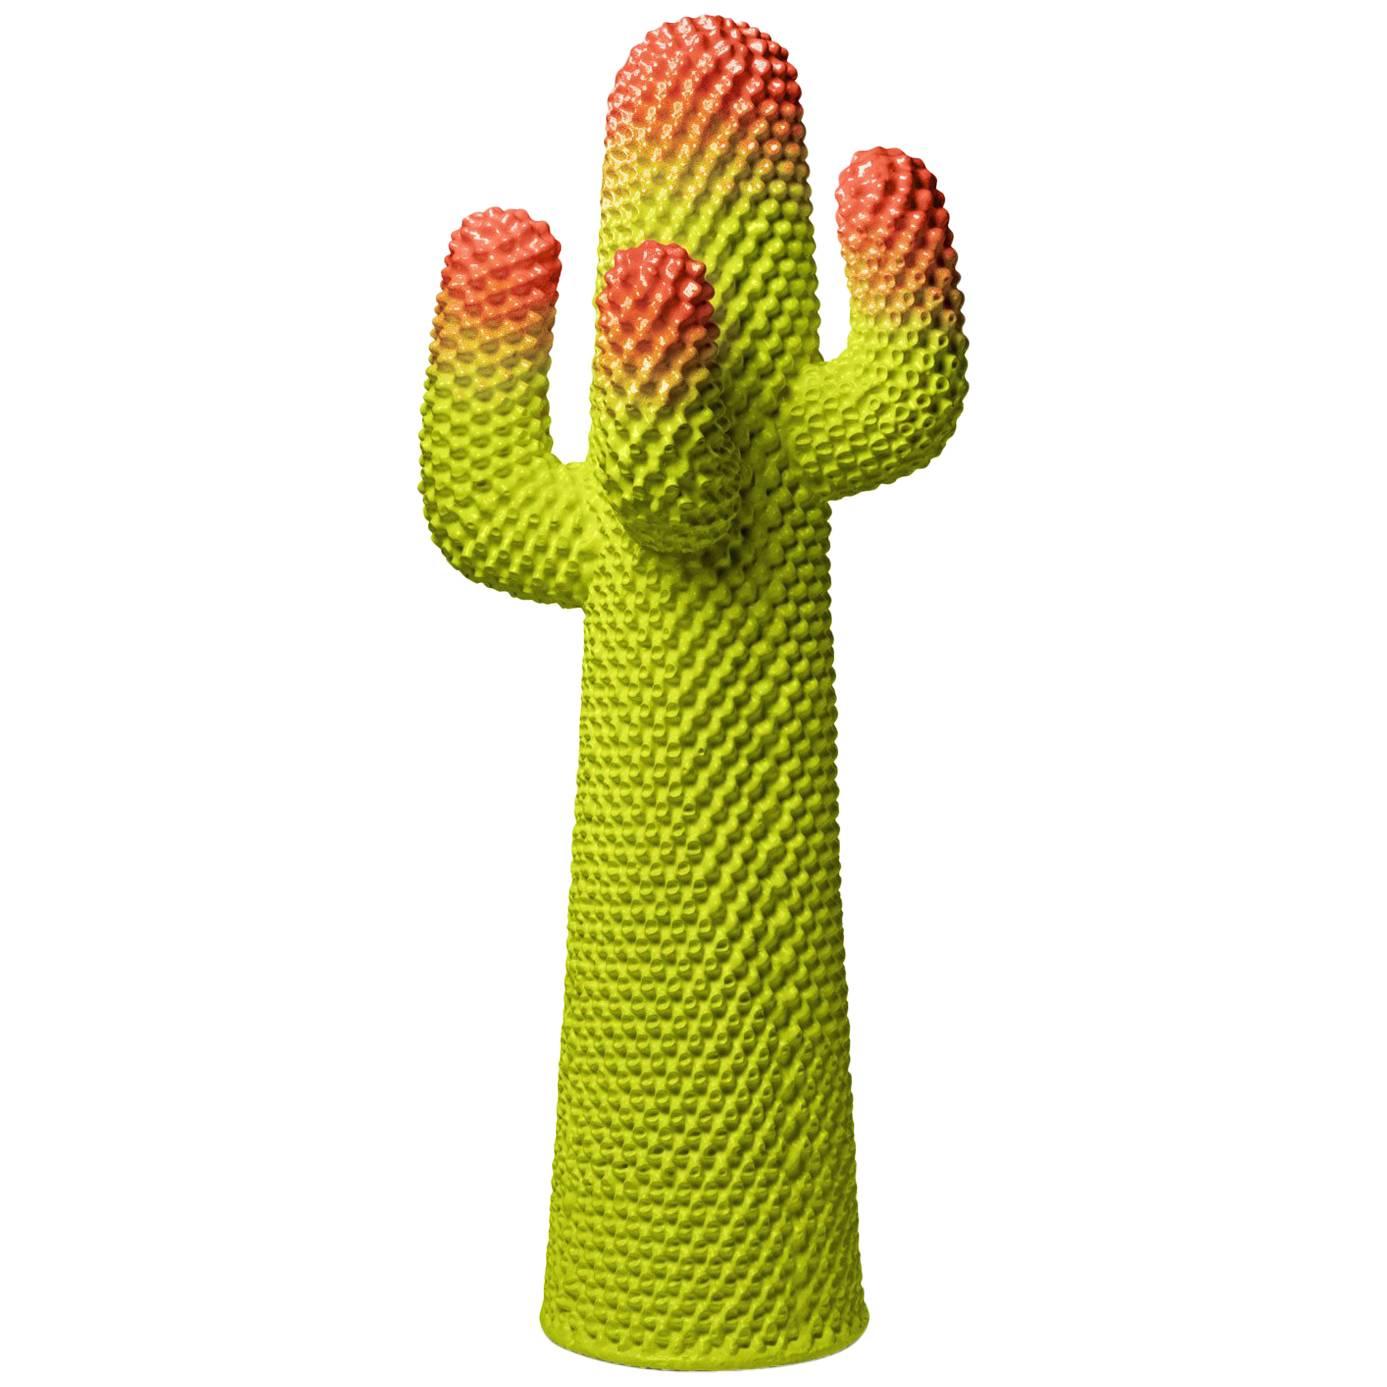 Gufram Meta Cactus Coat Hanger For Sale